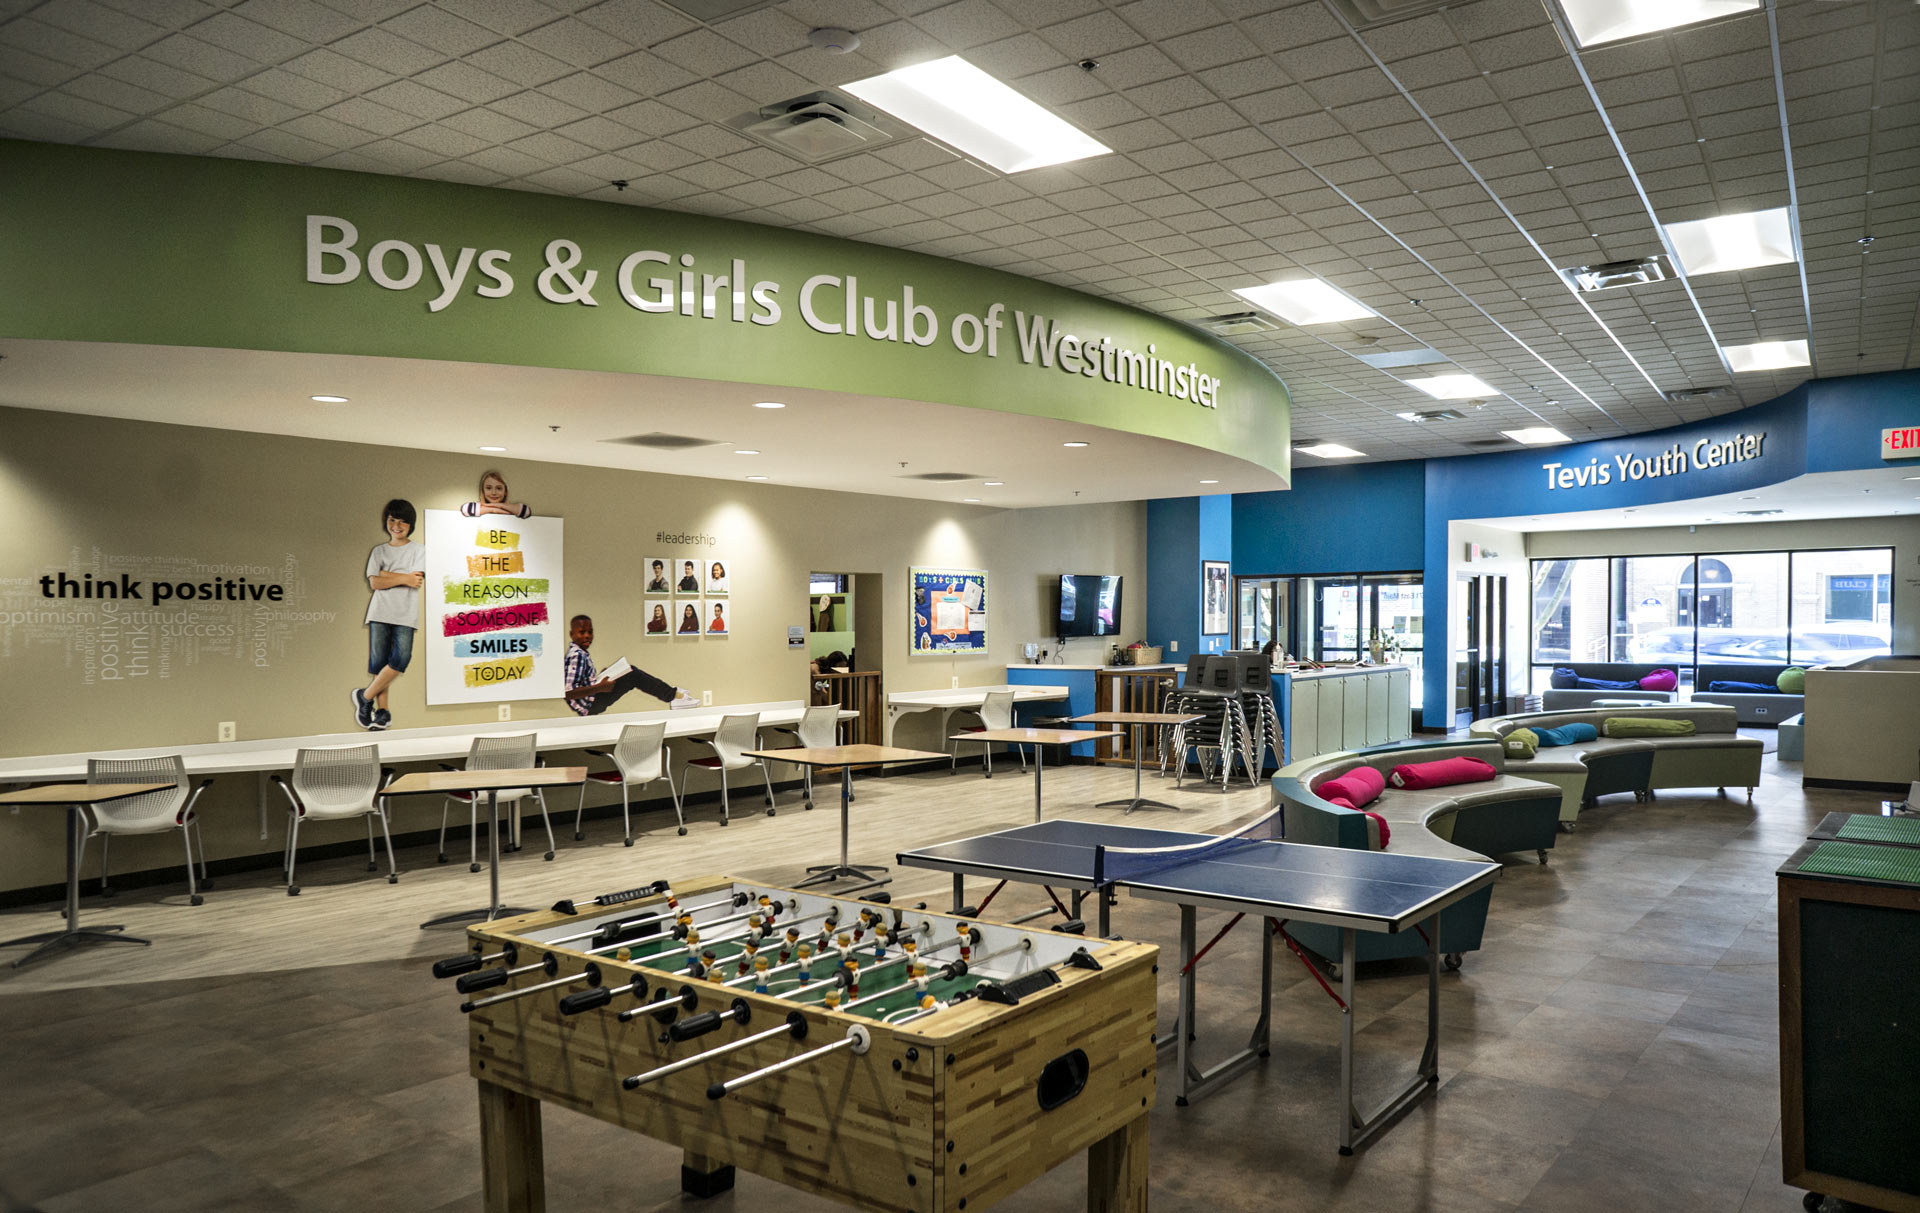 Boys & Girls Club of Westminster